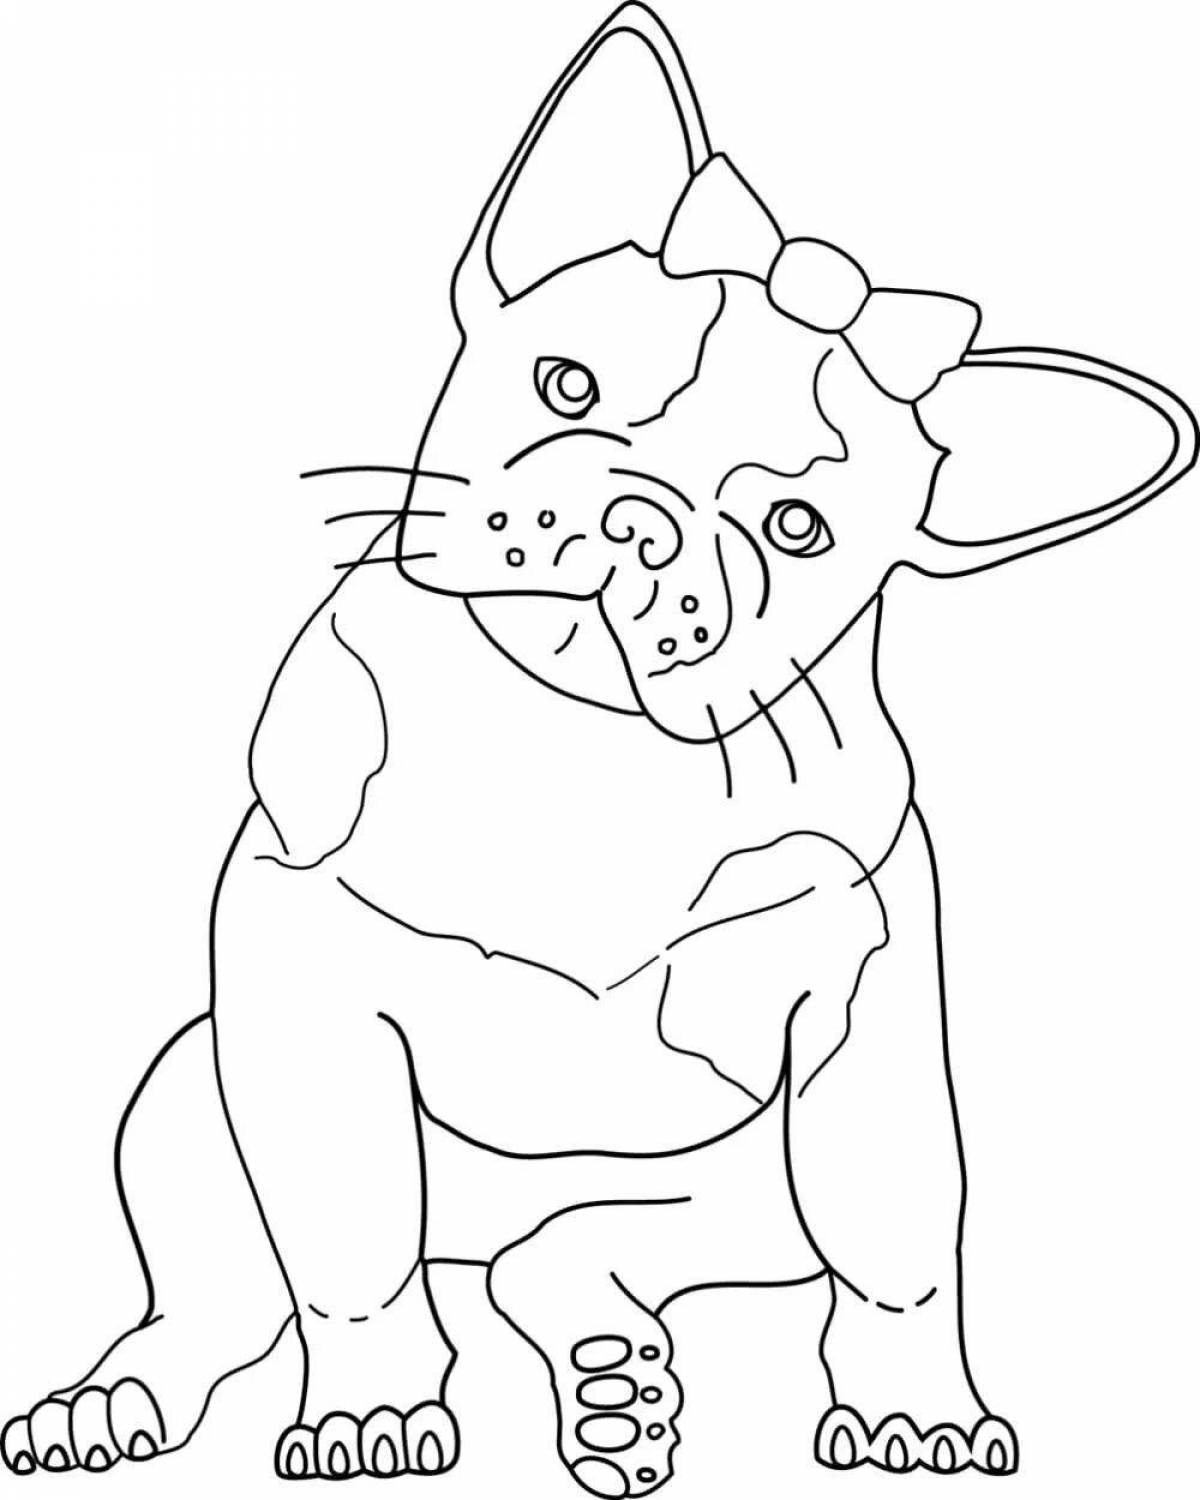 Fat bulldog coloring book for kids